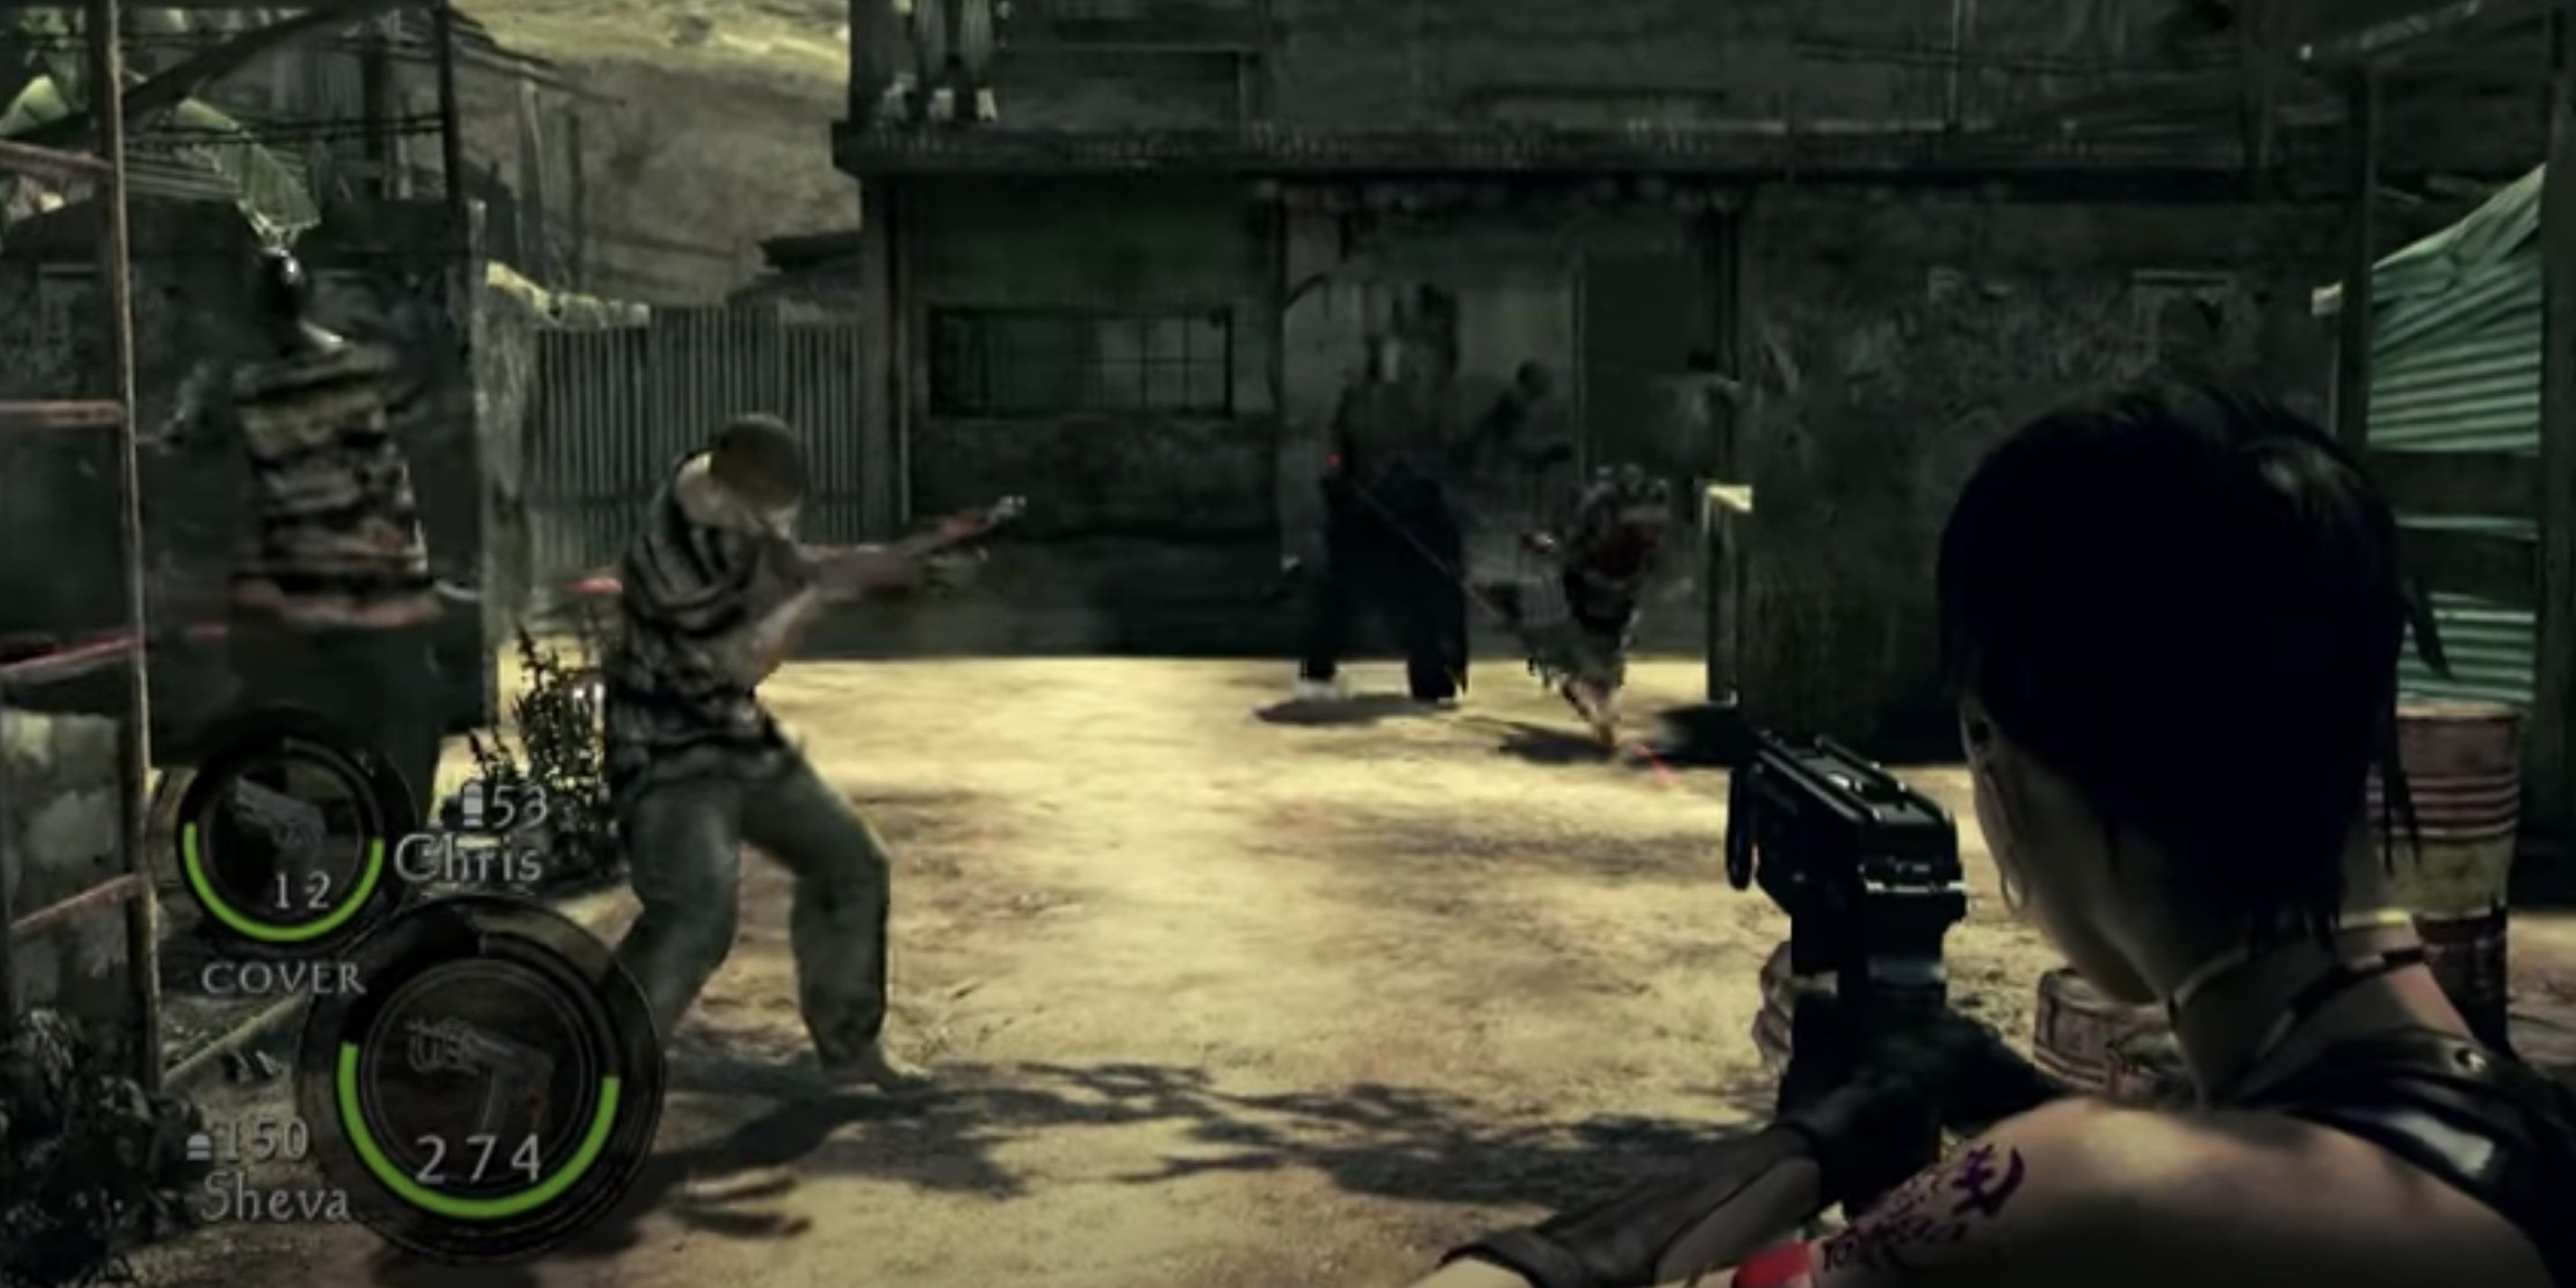 Sheva Gameplay Footage Shooting a Pistol Resident Evil 5